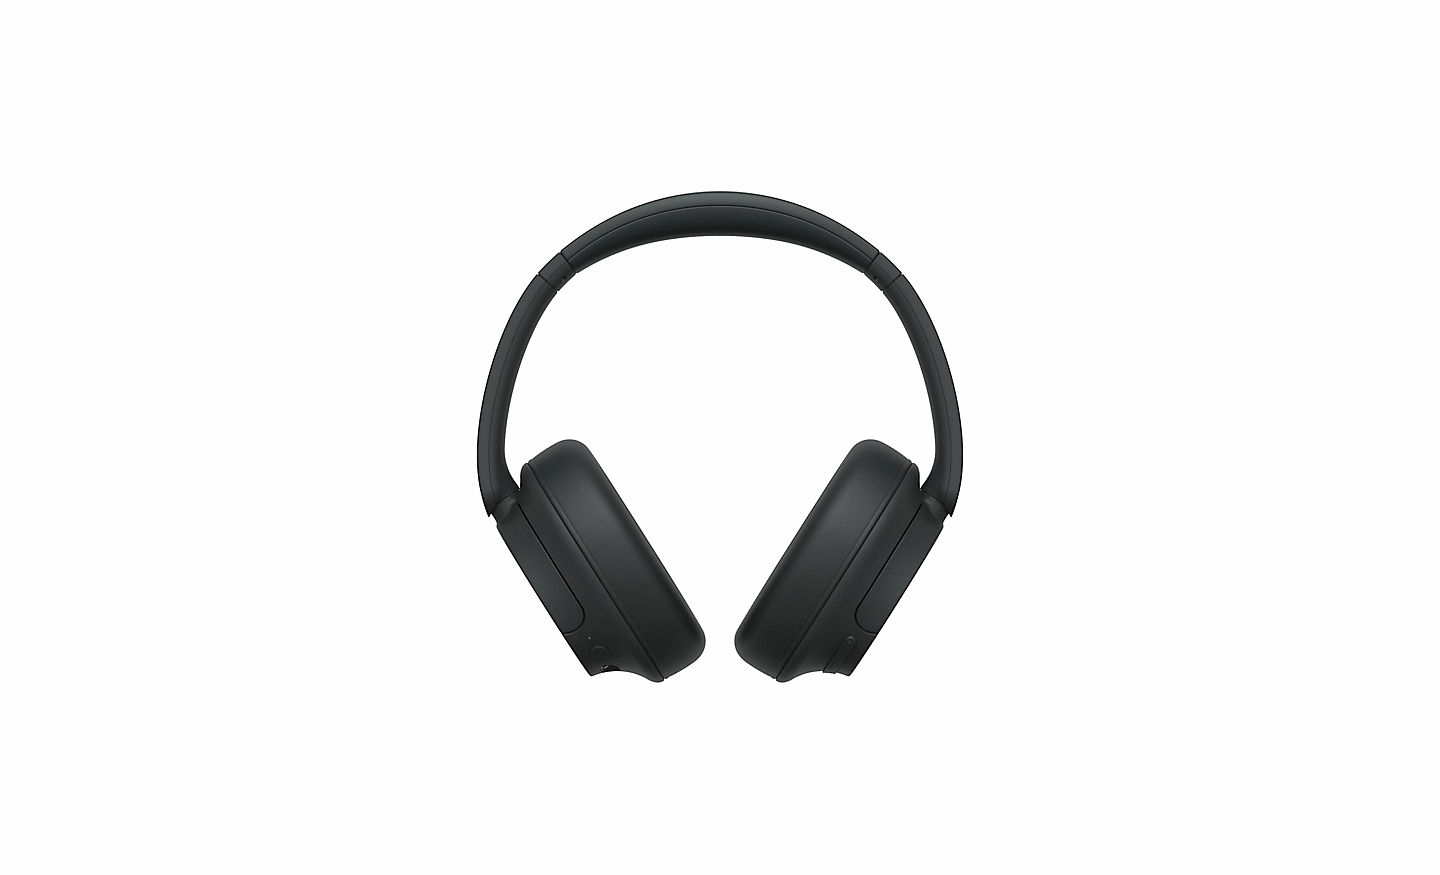 Slika crnih Sony WH-CH720 slušalica na beloj pozadini